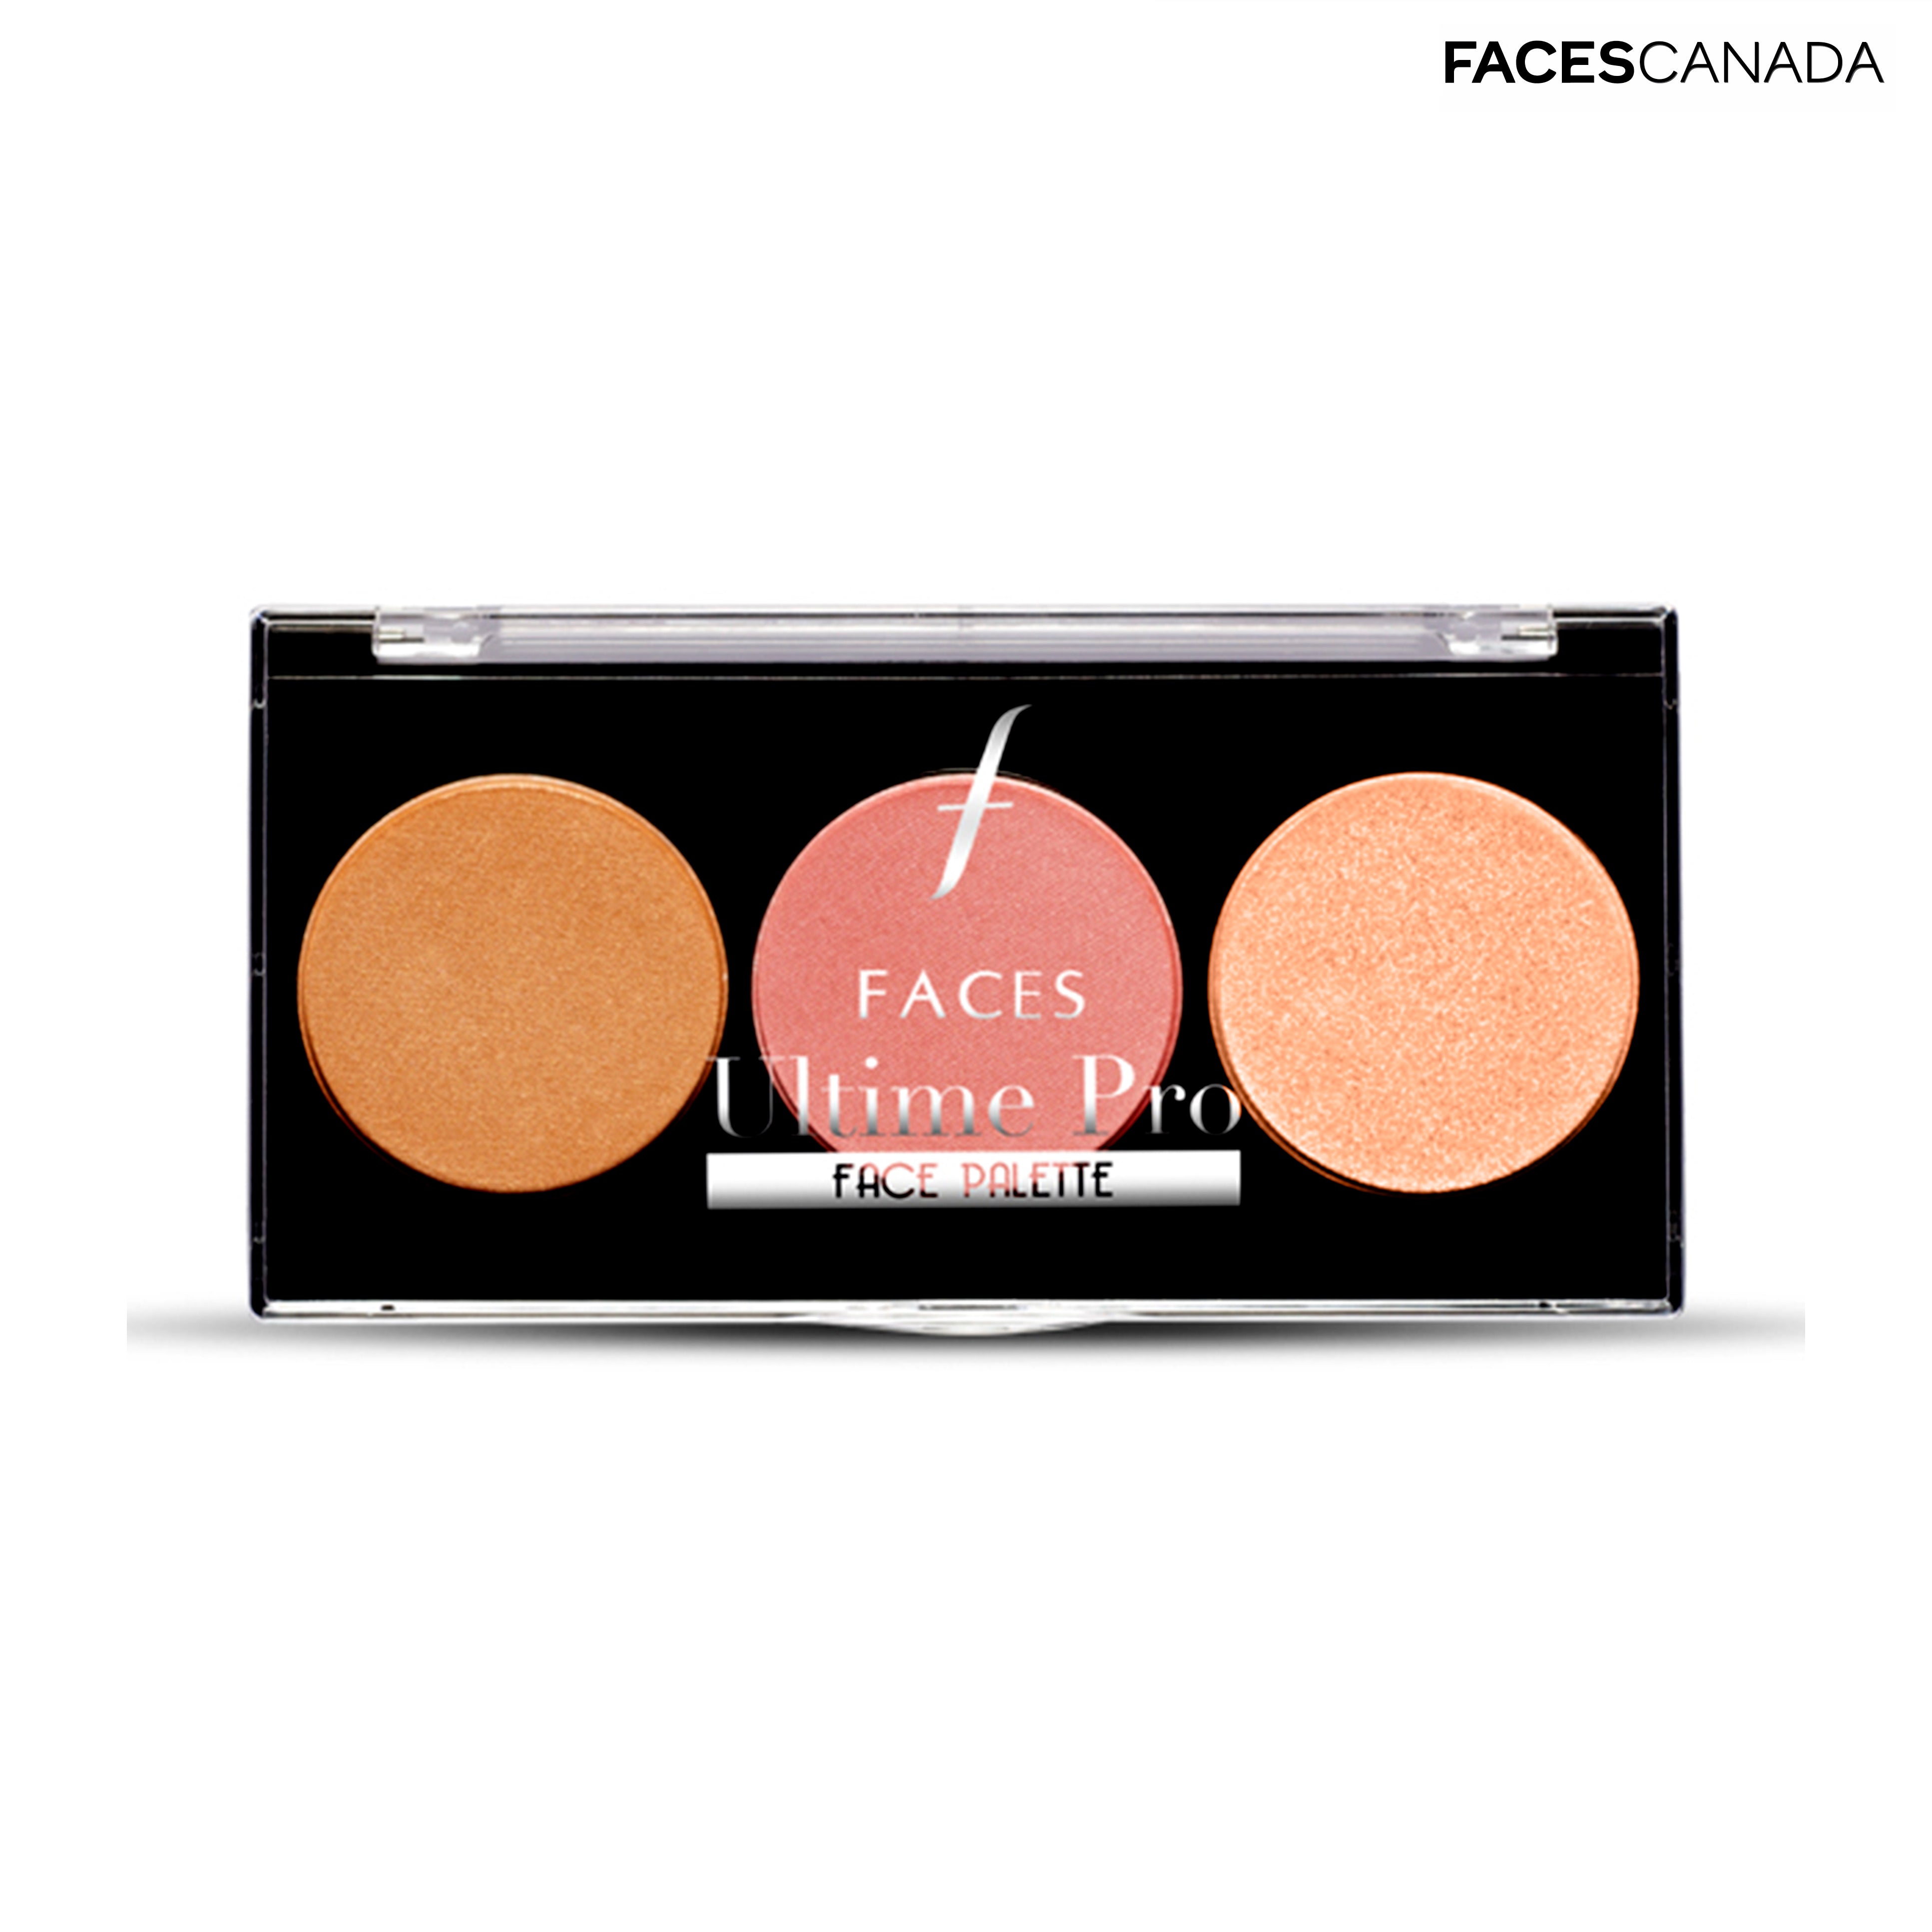 Faces Canada Ultime Pro Face Palette Faces Canada